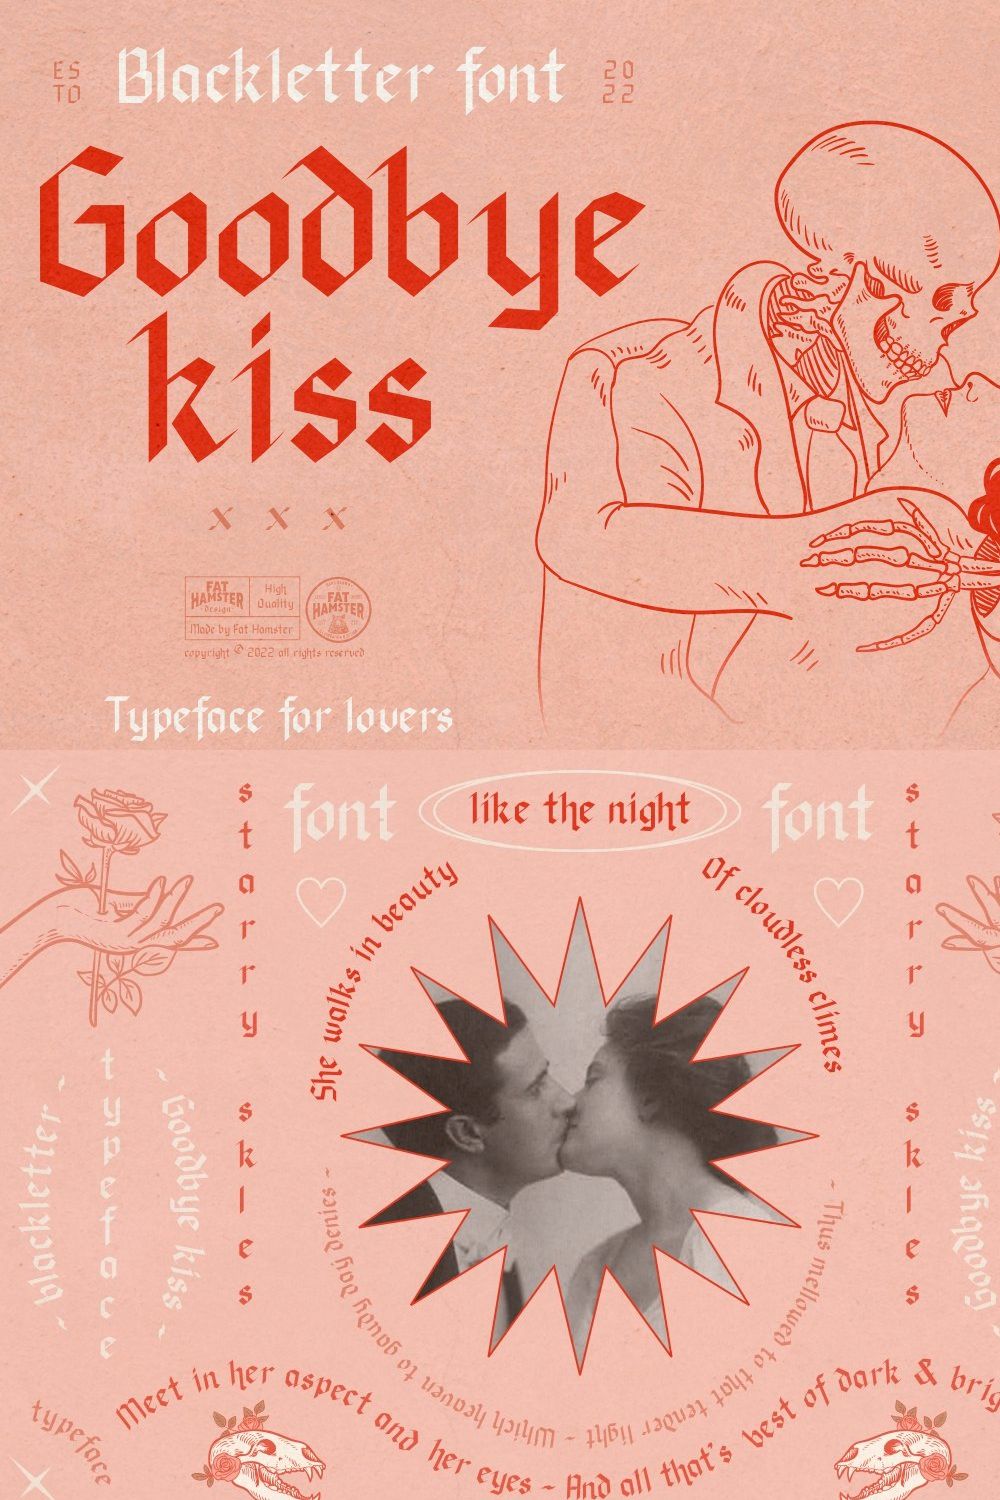 Goodbye kiss blackletter font pinterest preview image.